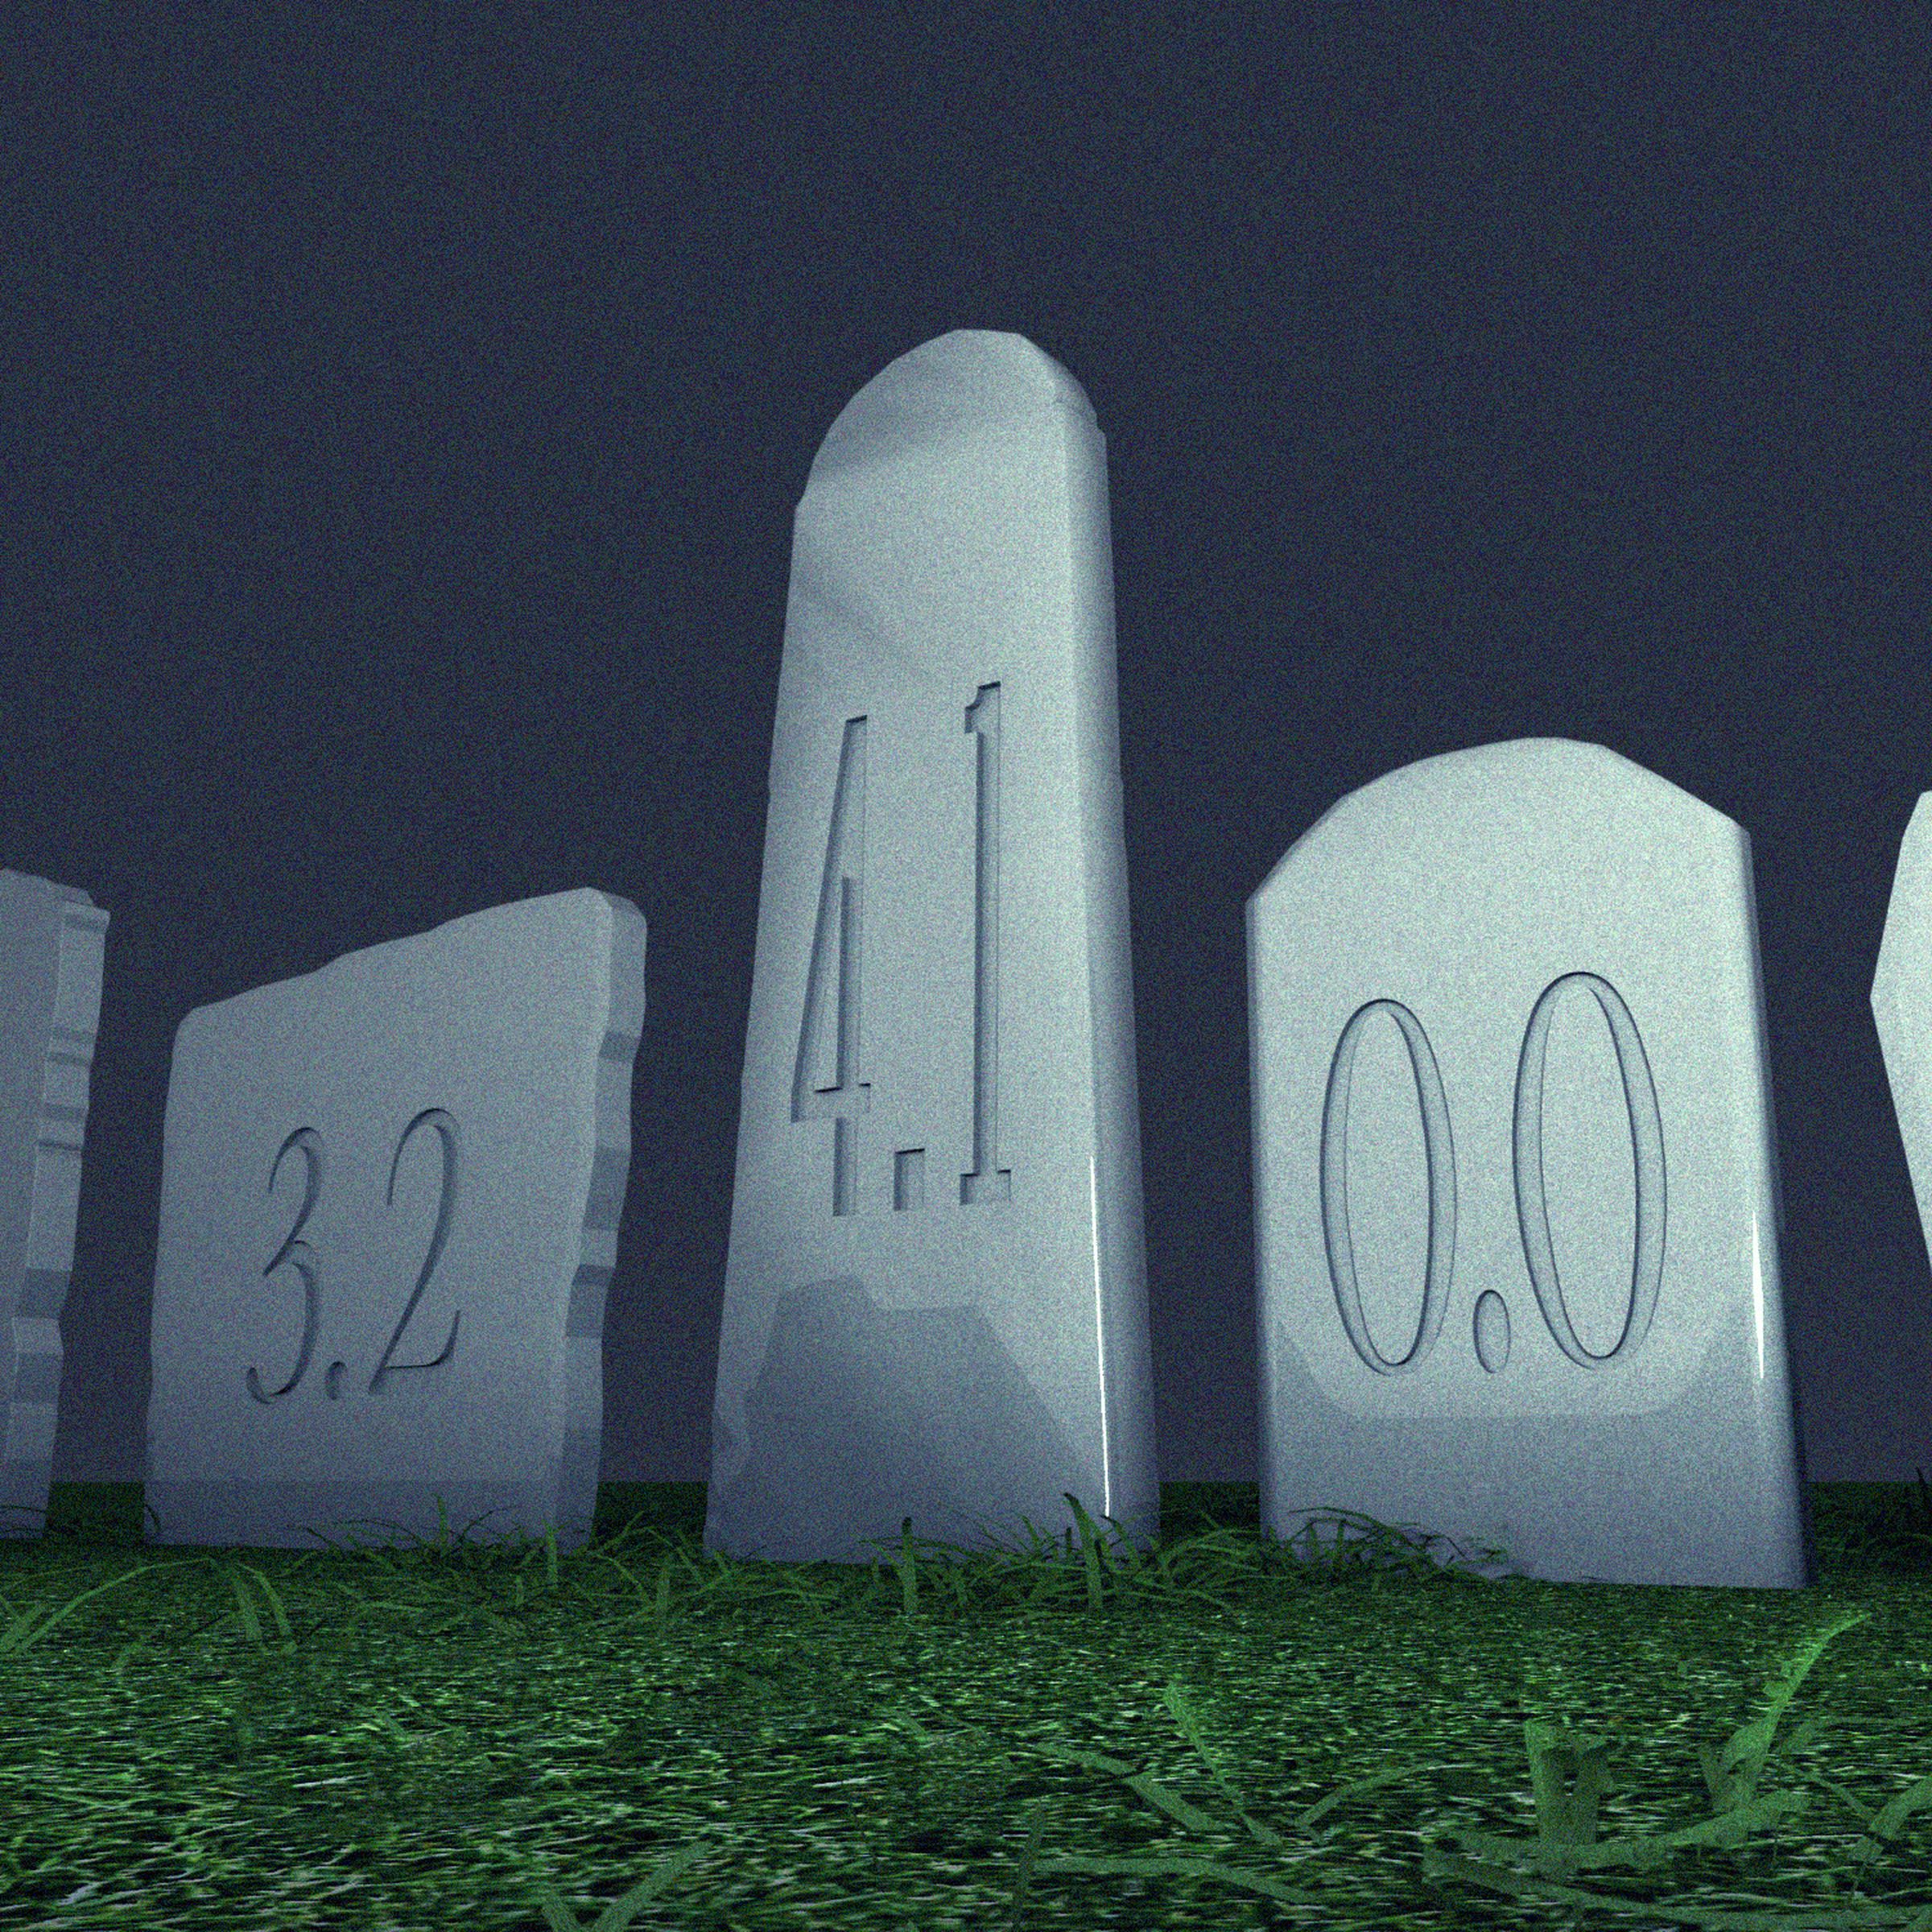 3D illustration of gravestones with bad album review scores.